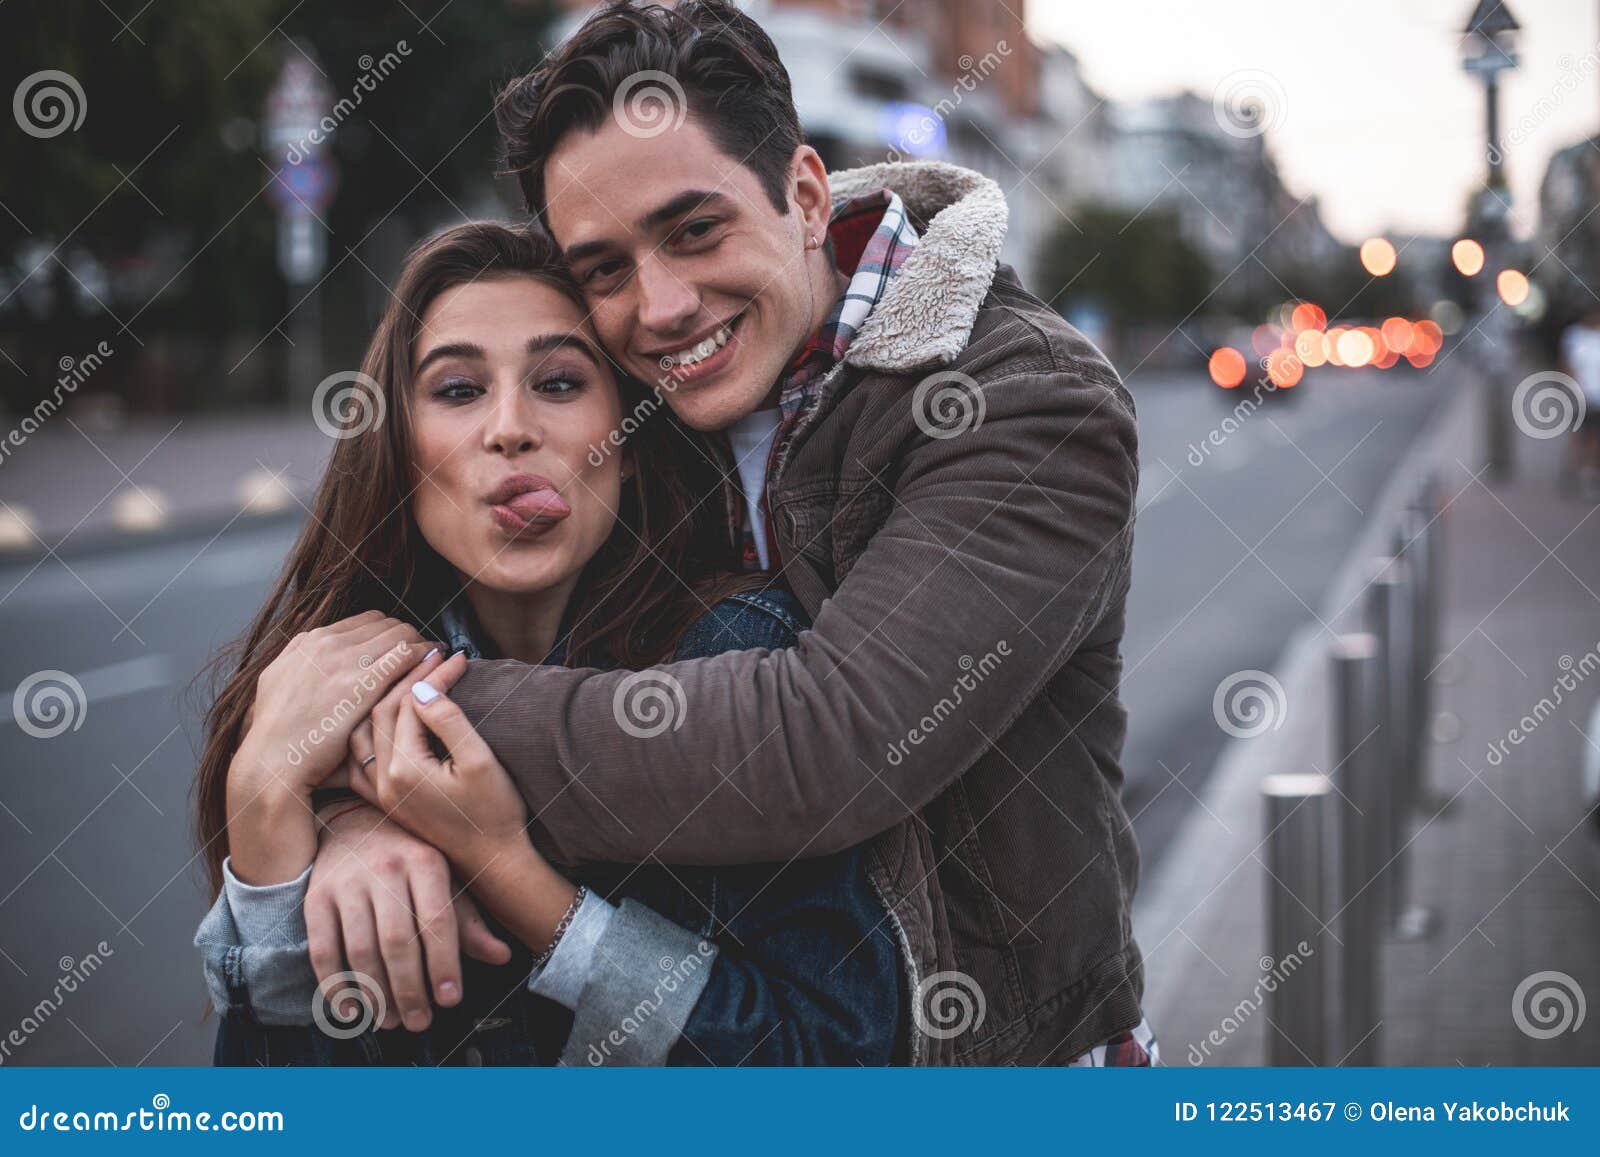 Loving Couple Having Fun On Date Stock Image Image Of City Make